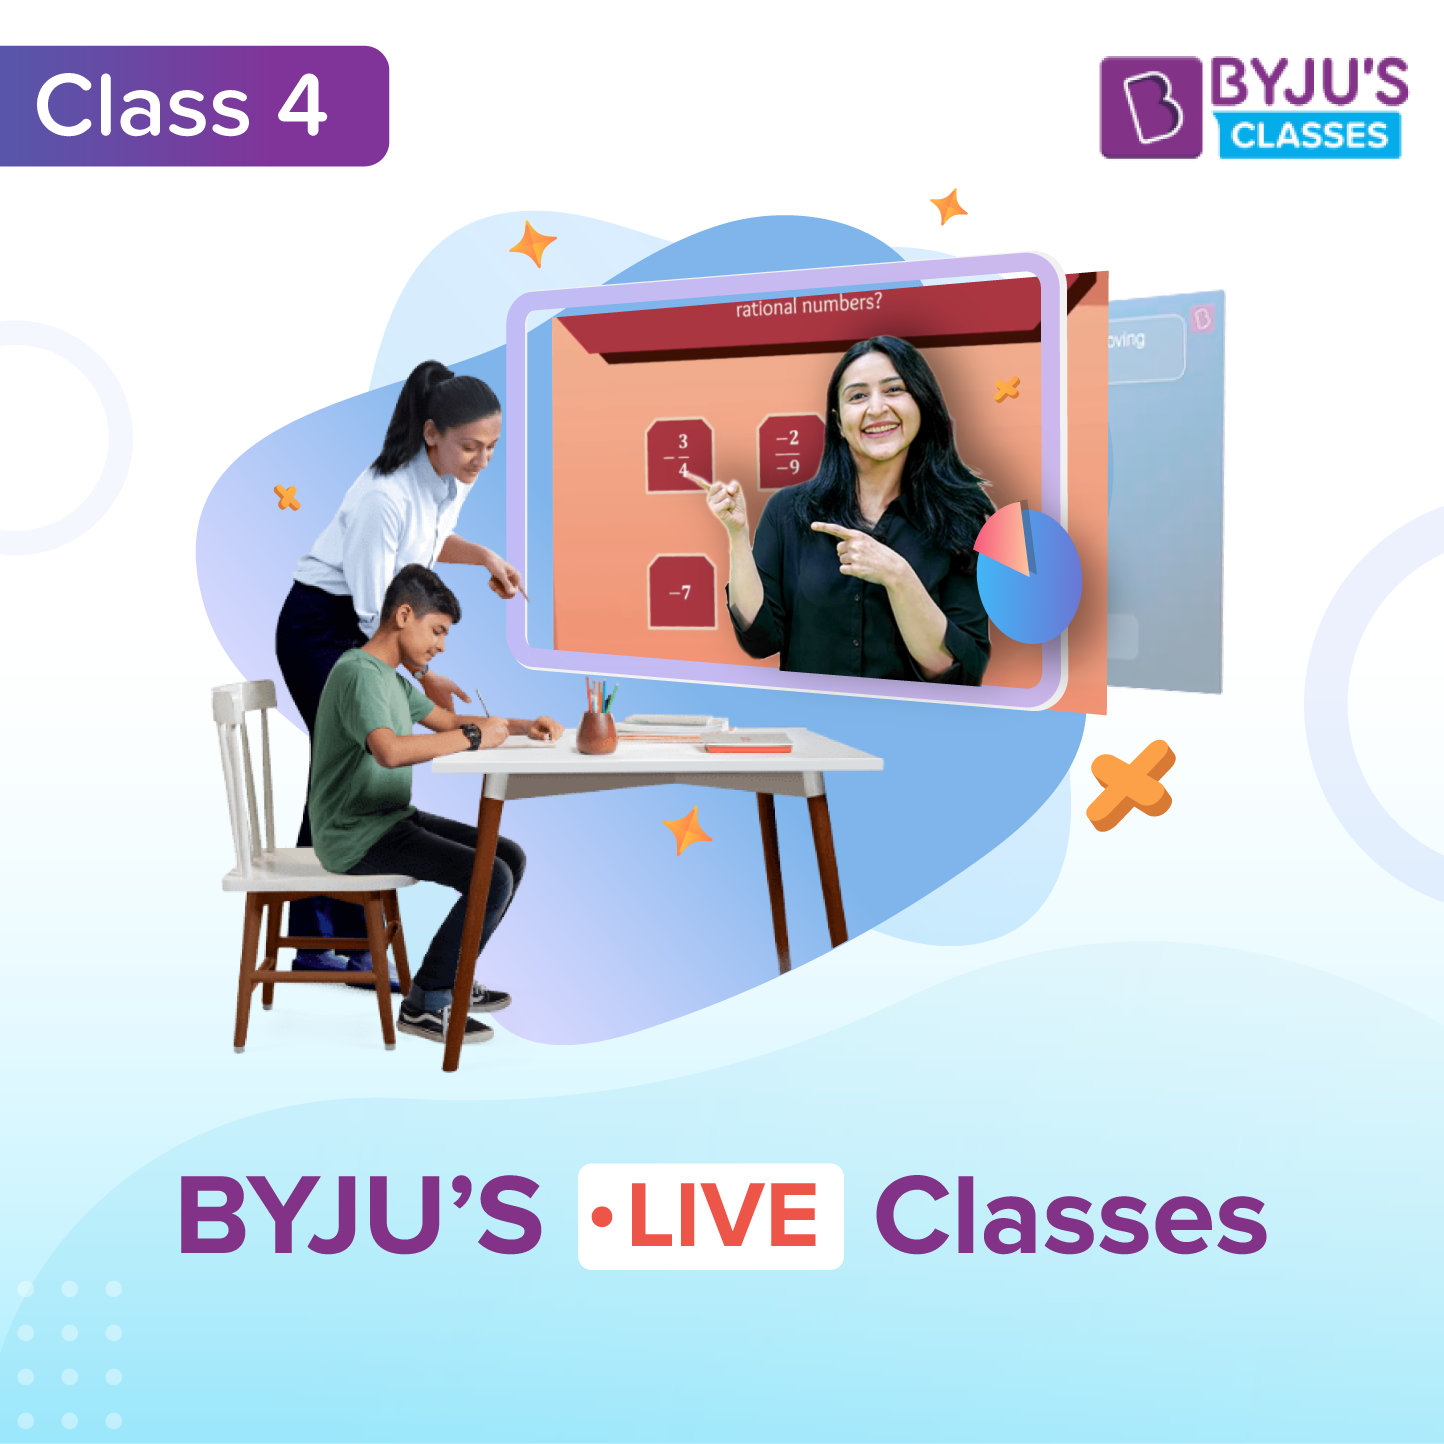 BYJU'S Live Classes - Class 4